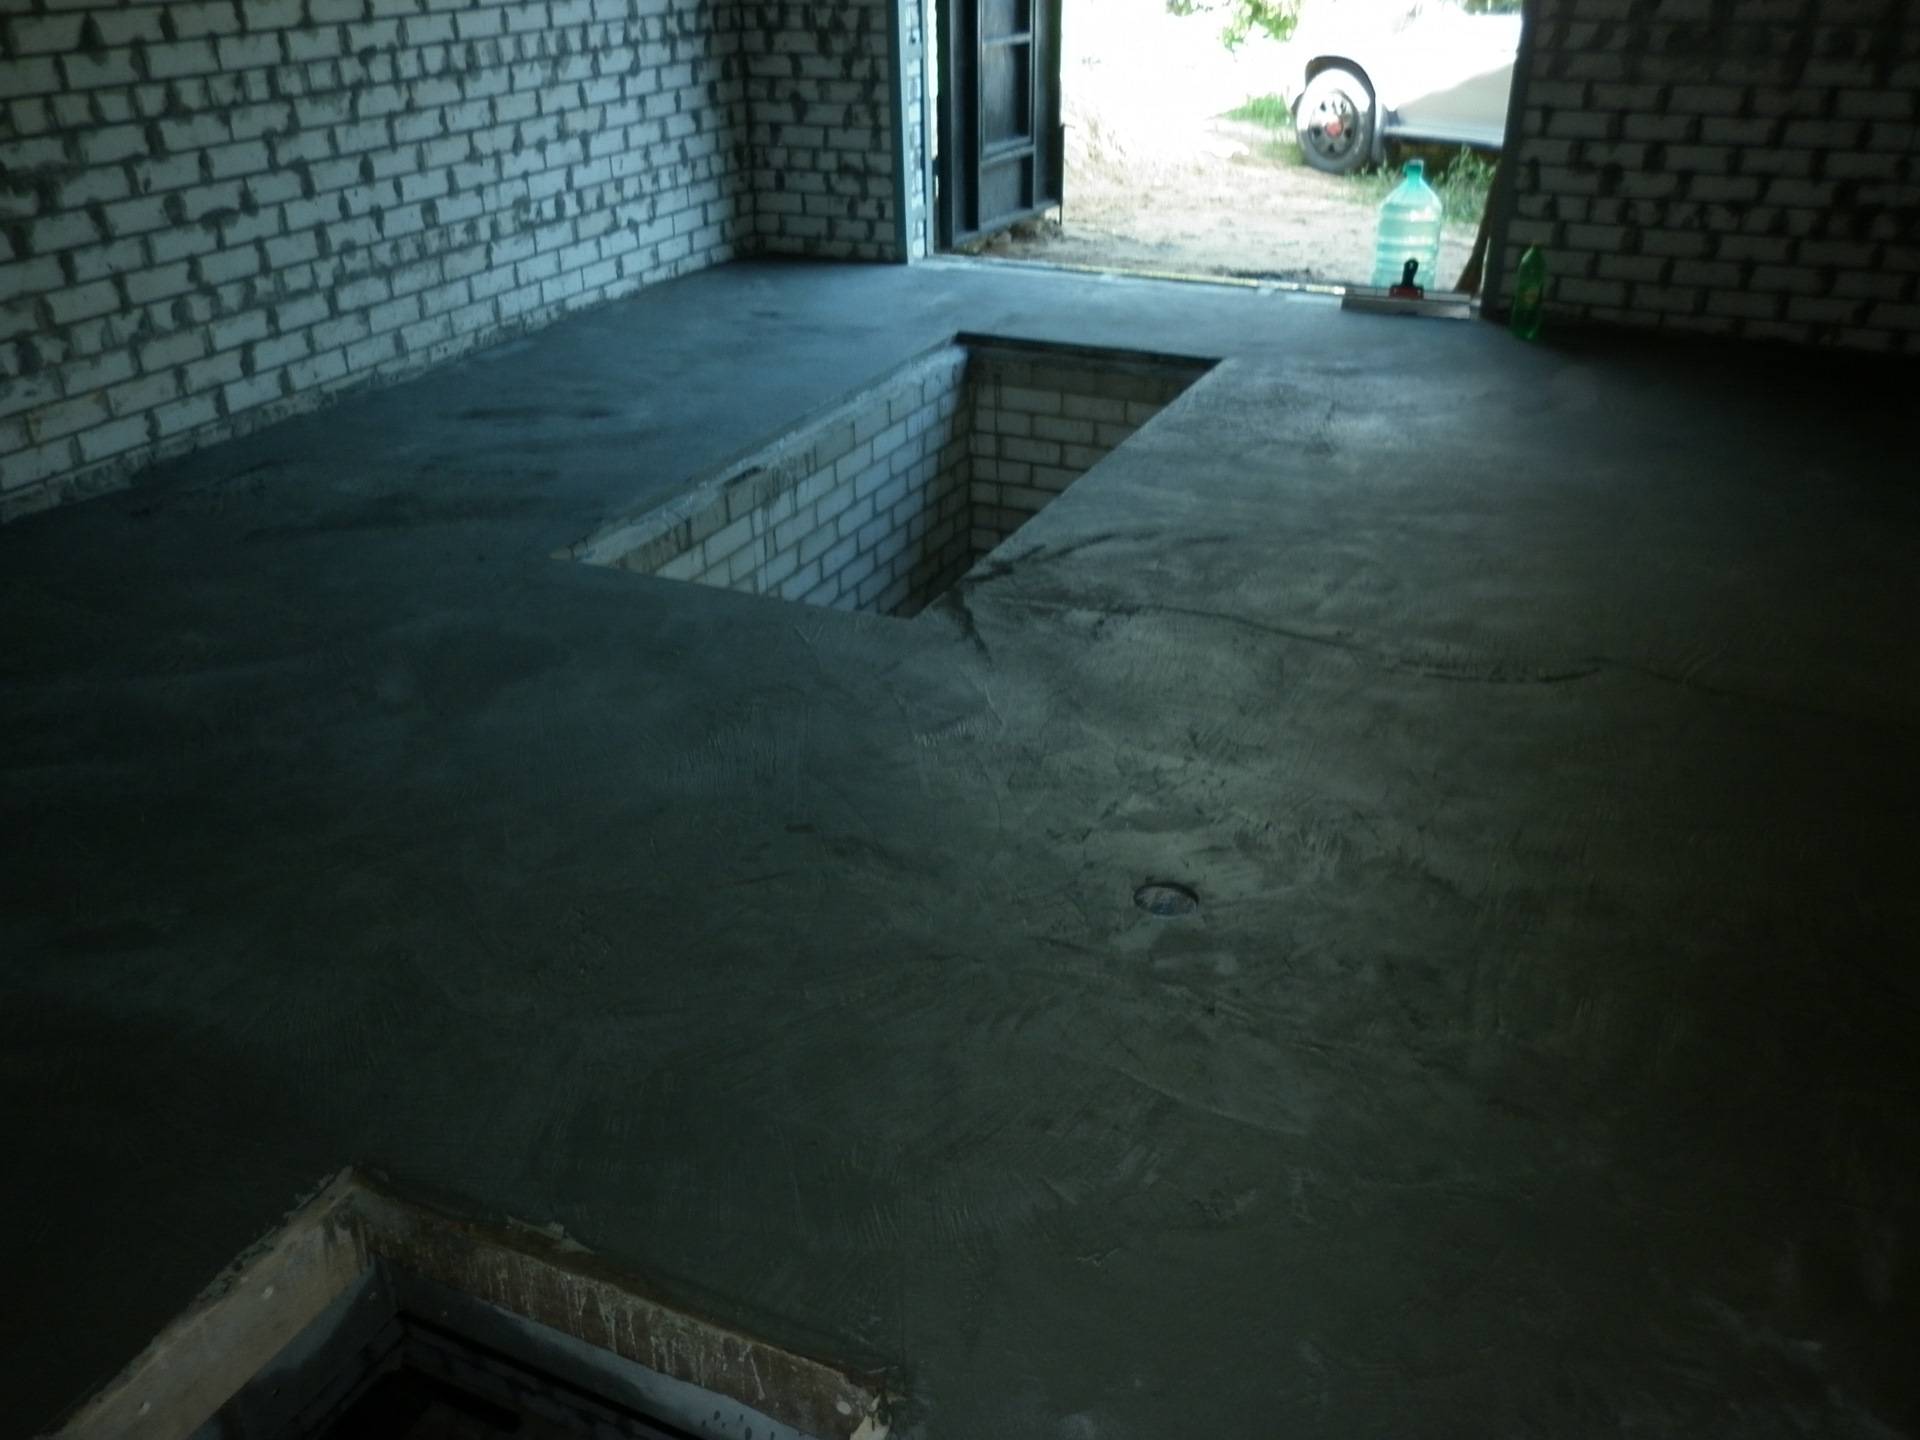 Заливка пола в гараже: гидроизоляция, бетонирование и шлифовка